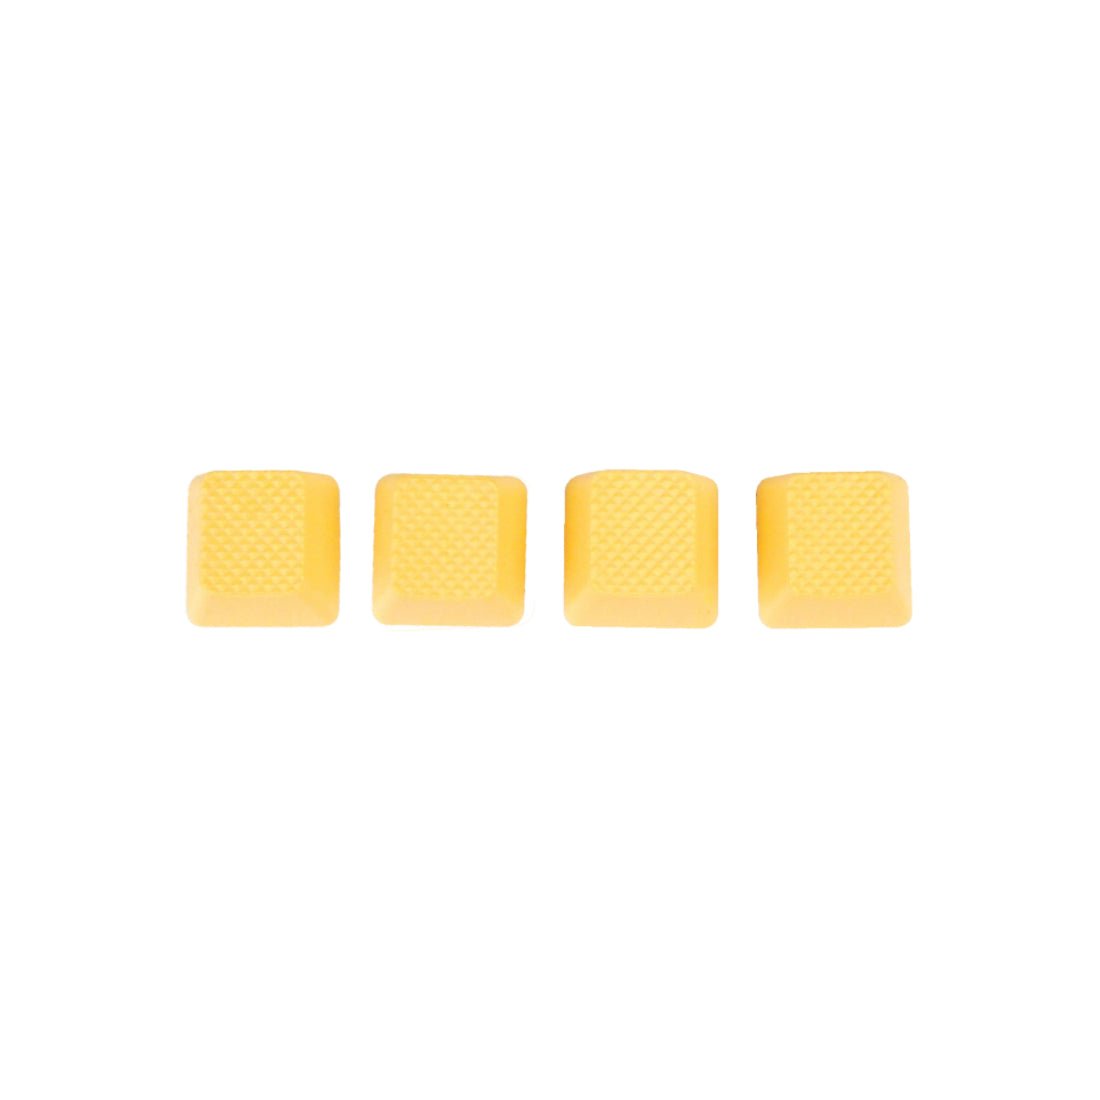 Tai-Hao 4 Key ABS Rubber Keycaps - Neon Orange - أكسسوار لوحة مفاتيح - Store 974 | ستور ٩٧٤